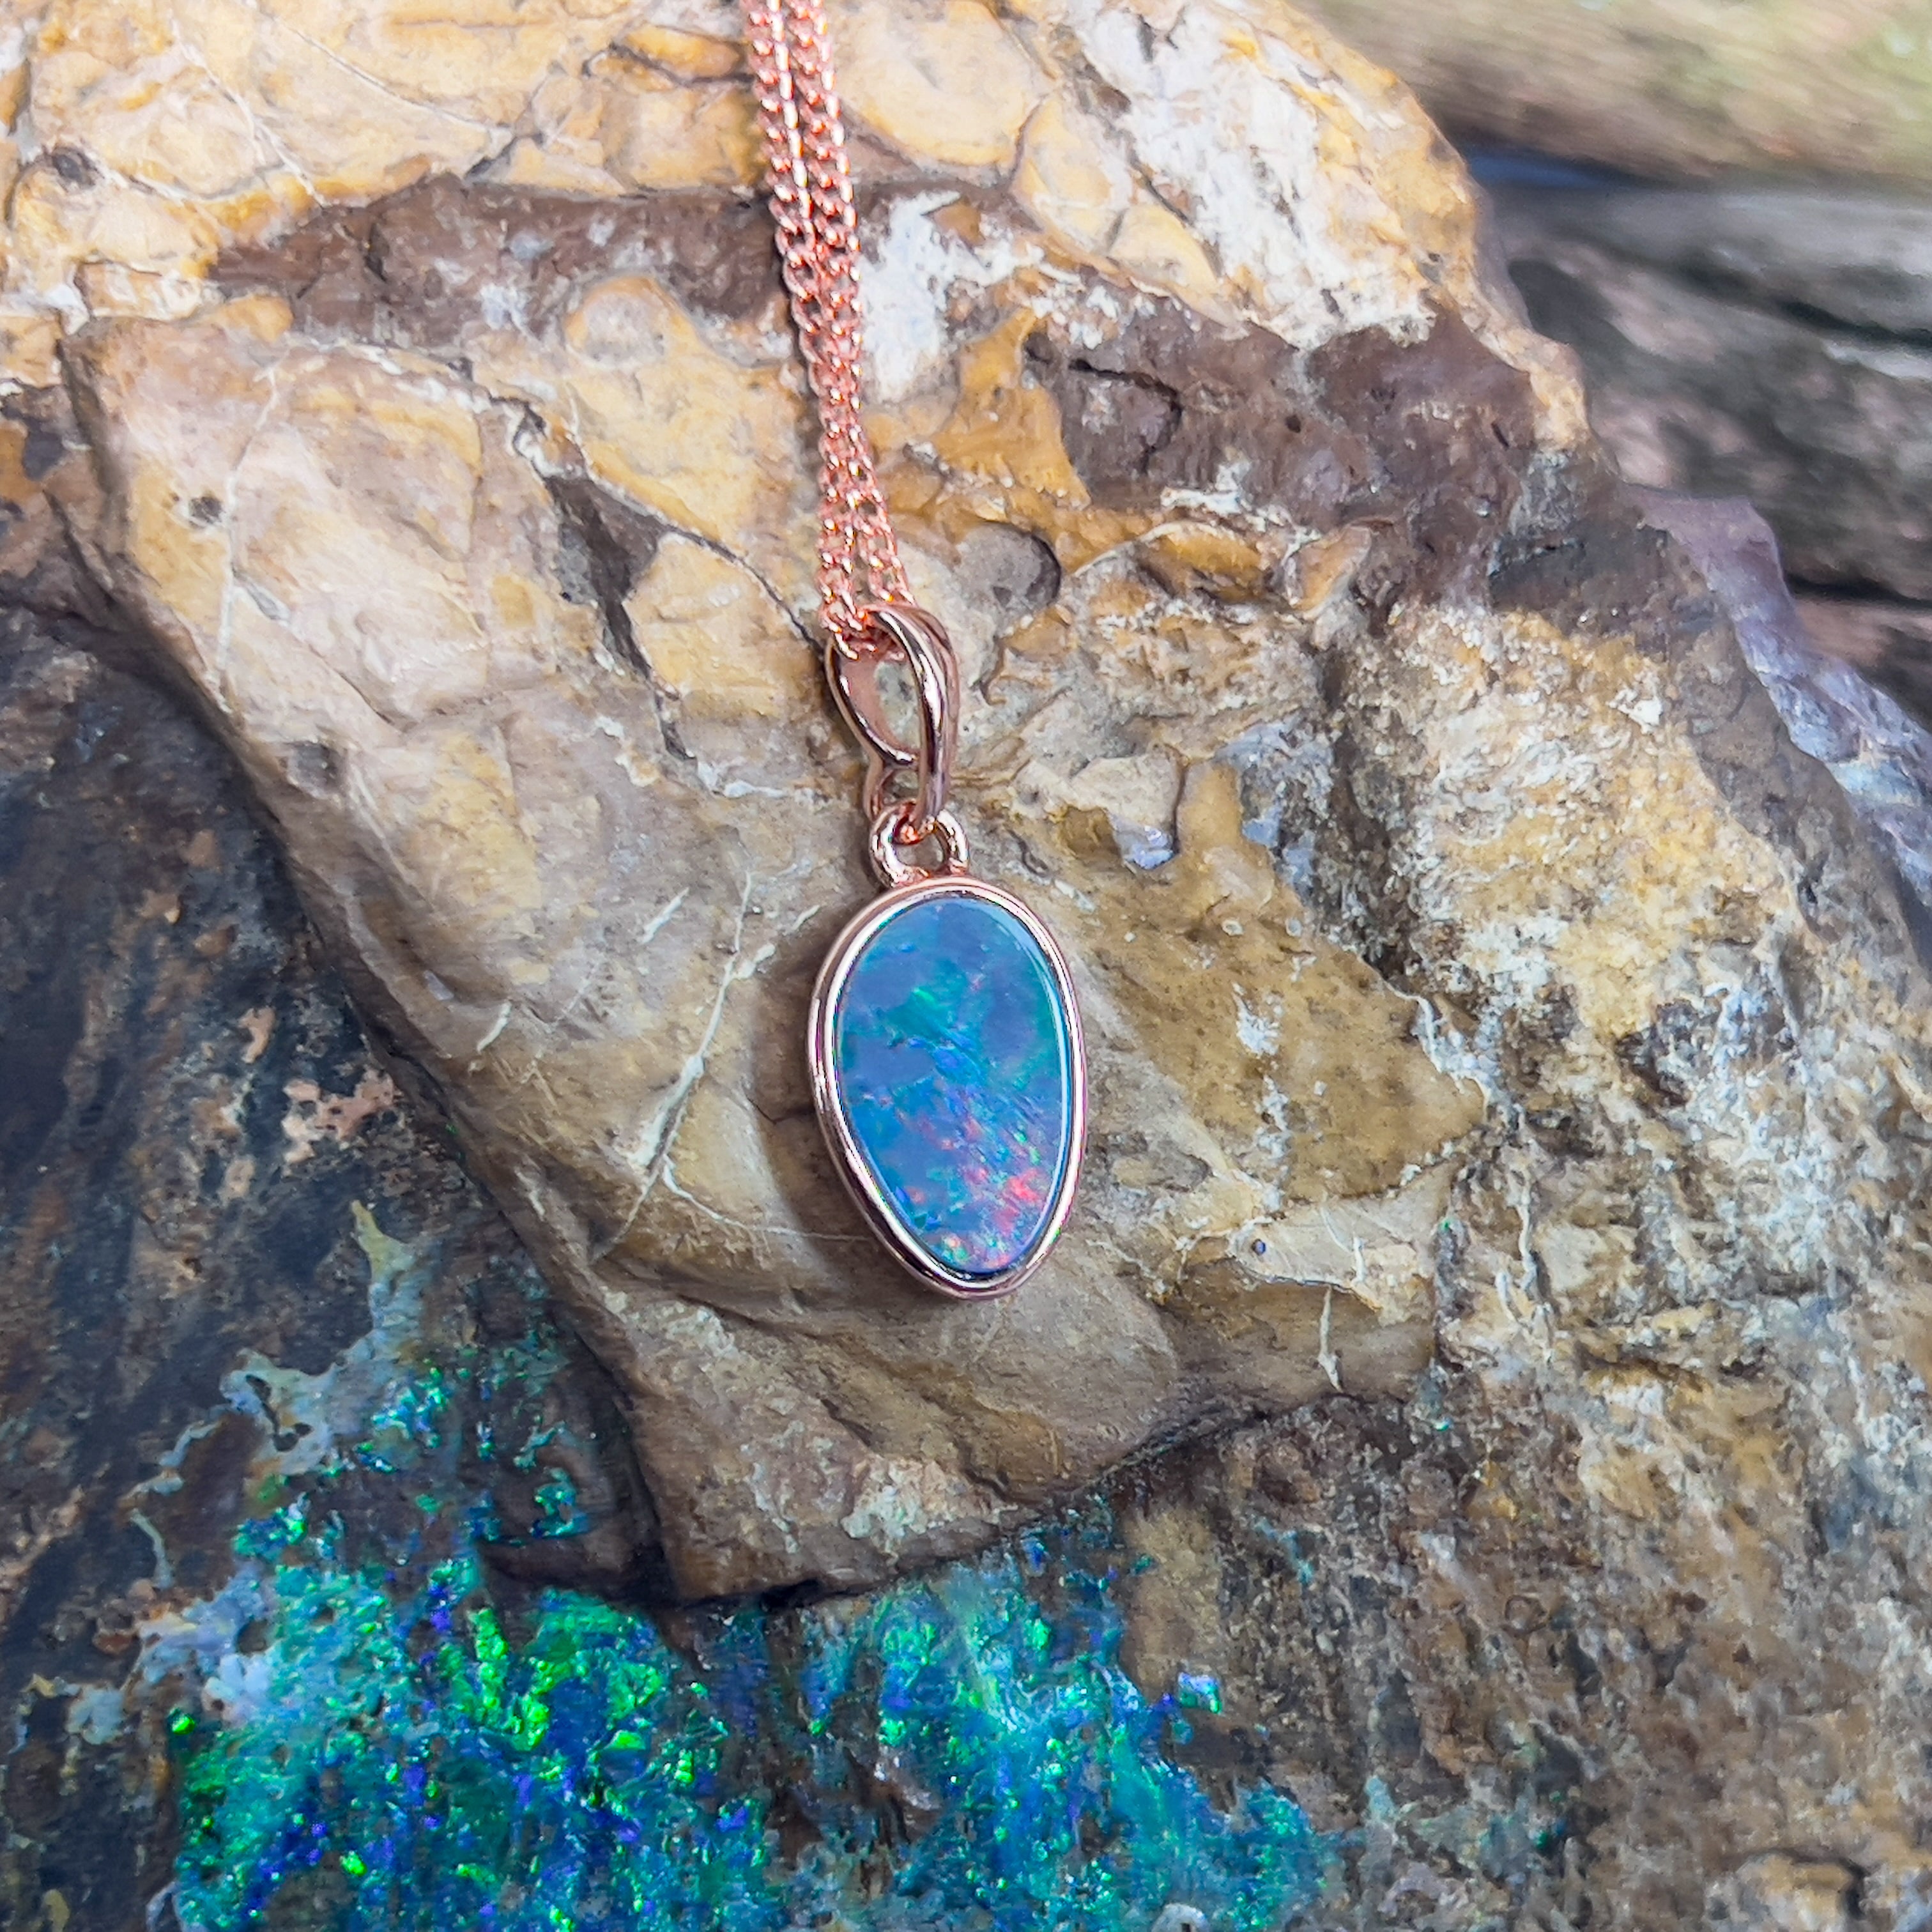 Rose Gold plated silver Opal doublet pendant - Masterpiece Jewellery Opal & Gems Sydney Australia | Online Shop